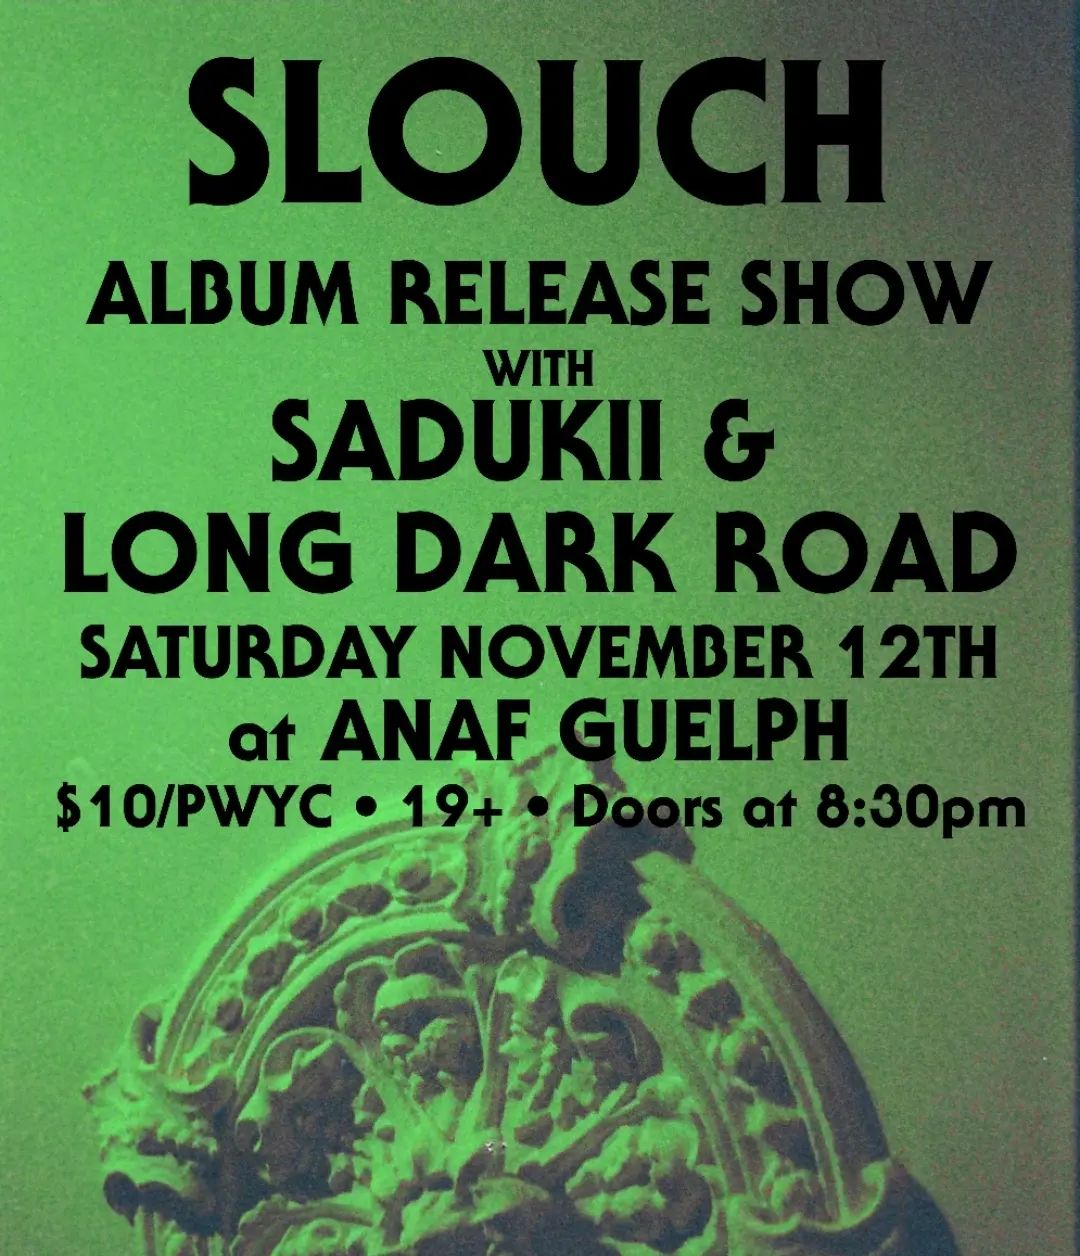 Slouch Album Release wsg The Long Dark Road, Sadukii